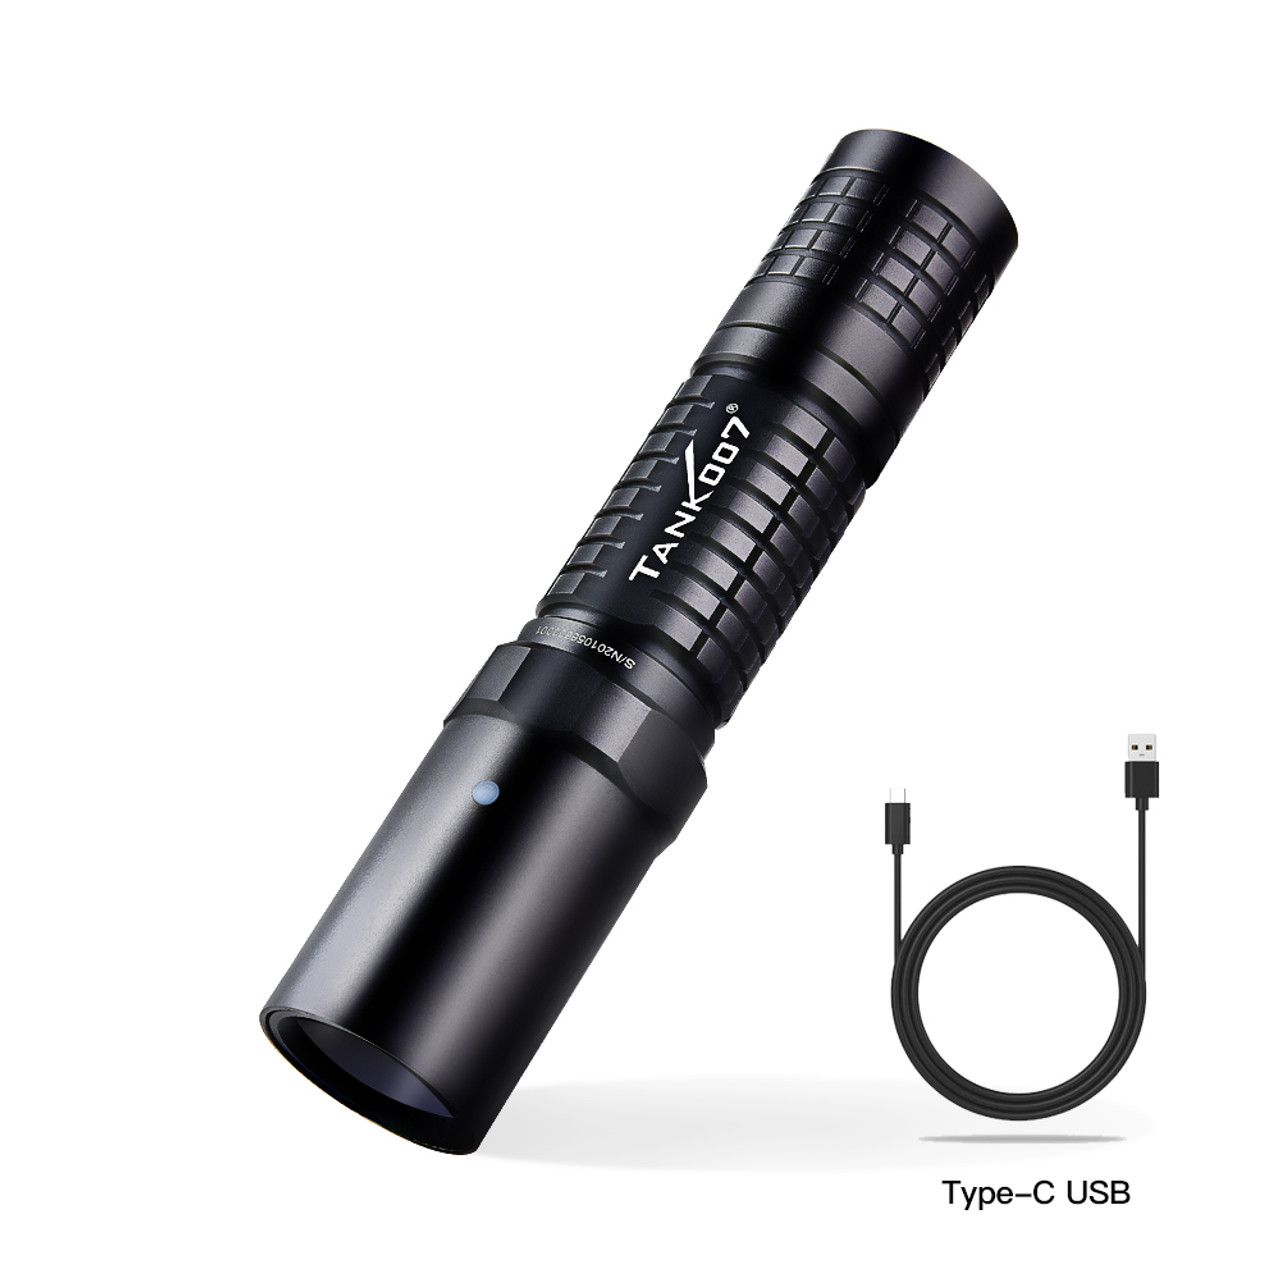 TANK007 UV03 365 nm Portable AAA Battery Powered UV Flashlight